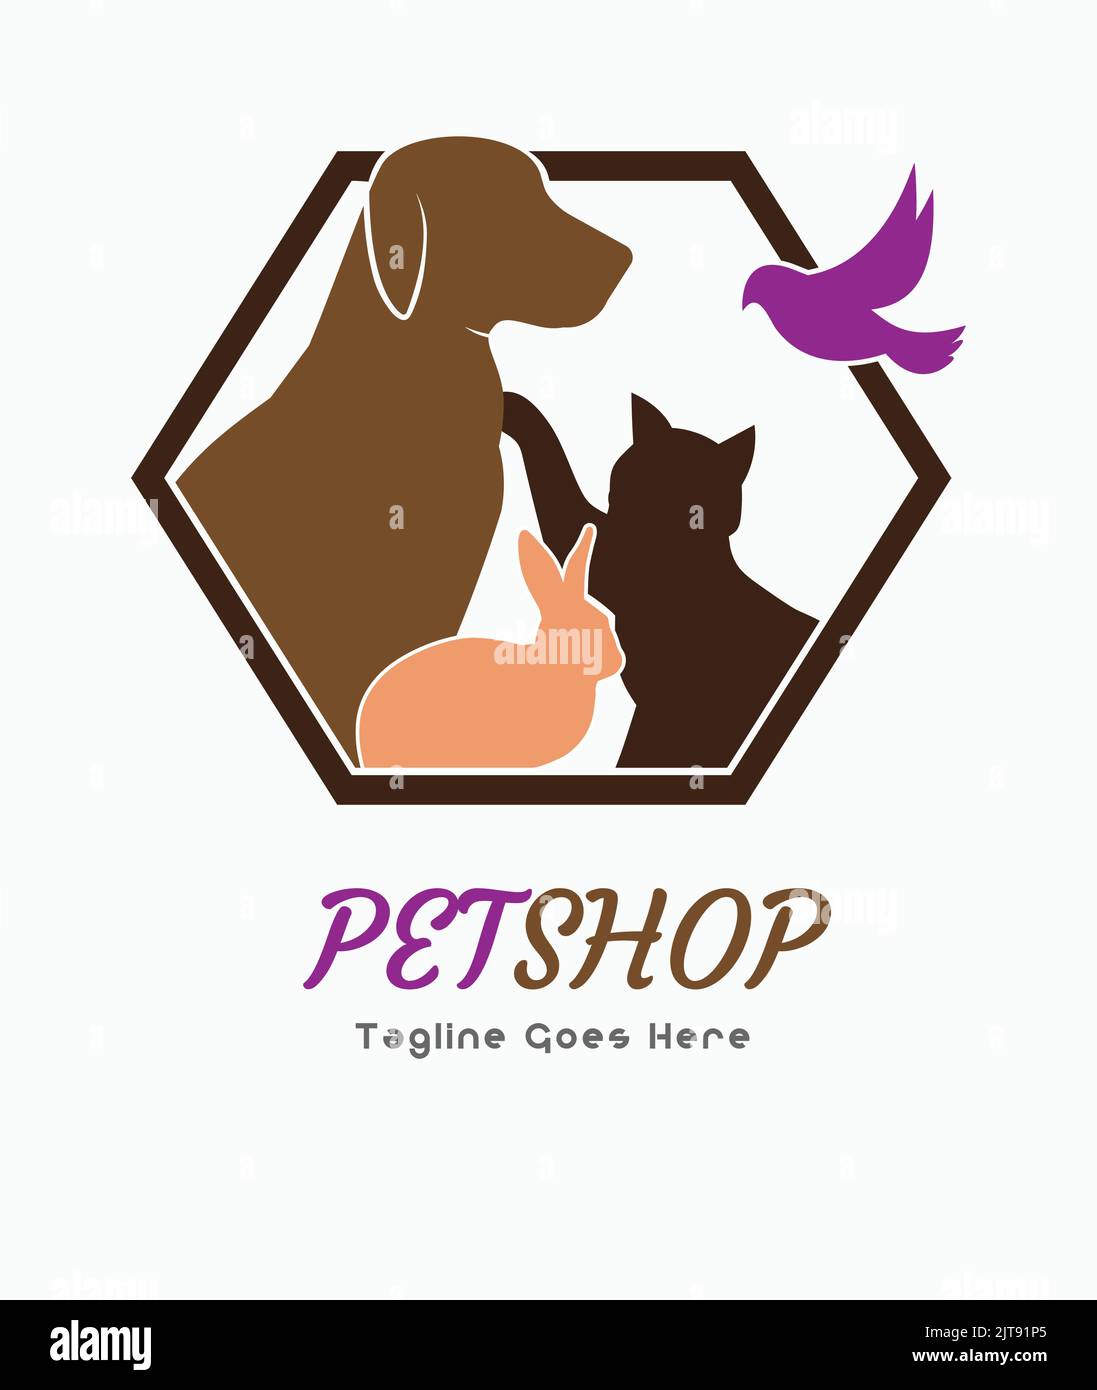 pet shop logo vector dog cat rabbit bird with hexagon shape pet store logo  animal care store cute bunny cat dog best logo Stock Vector